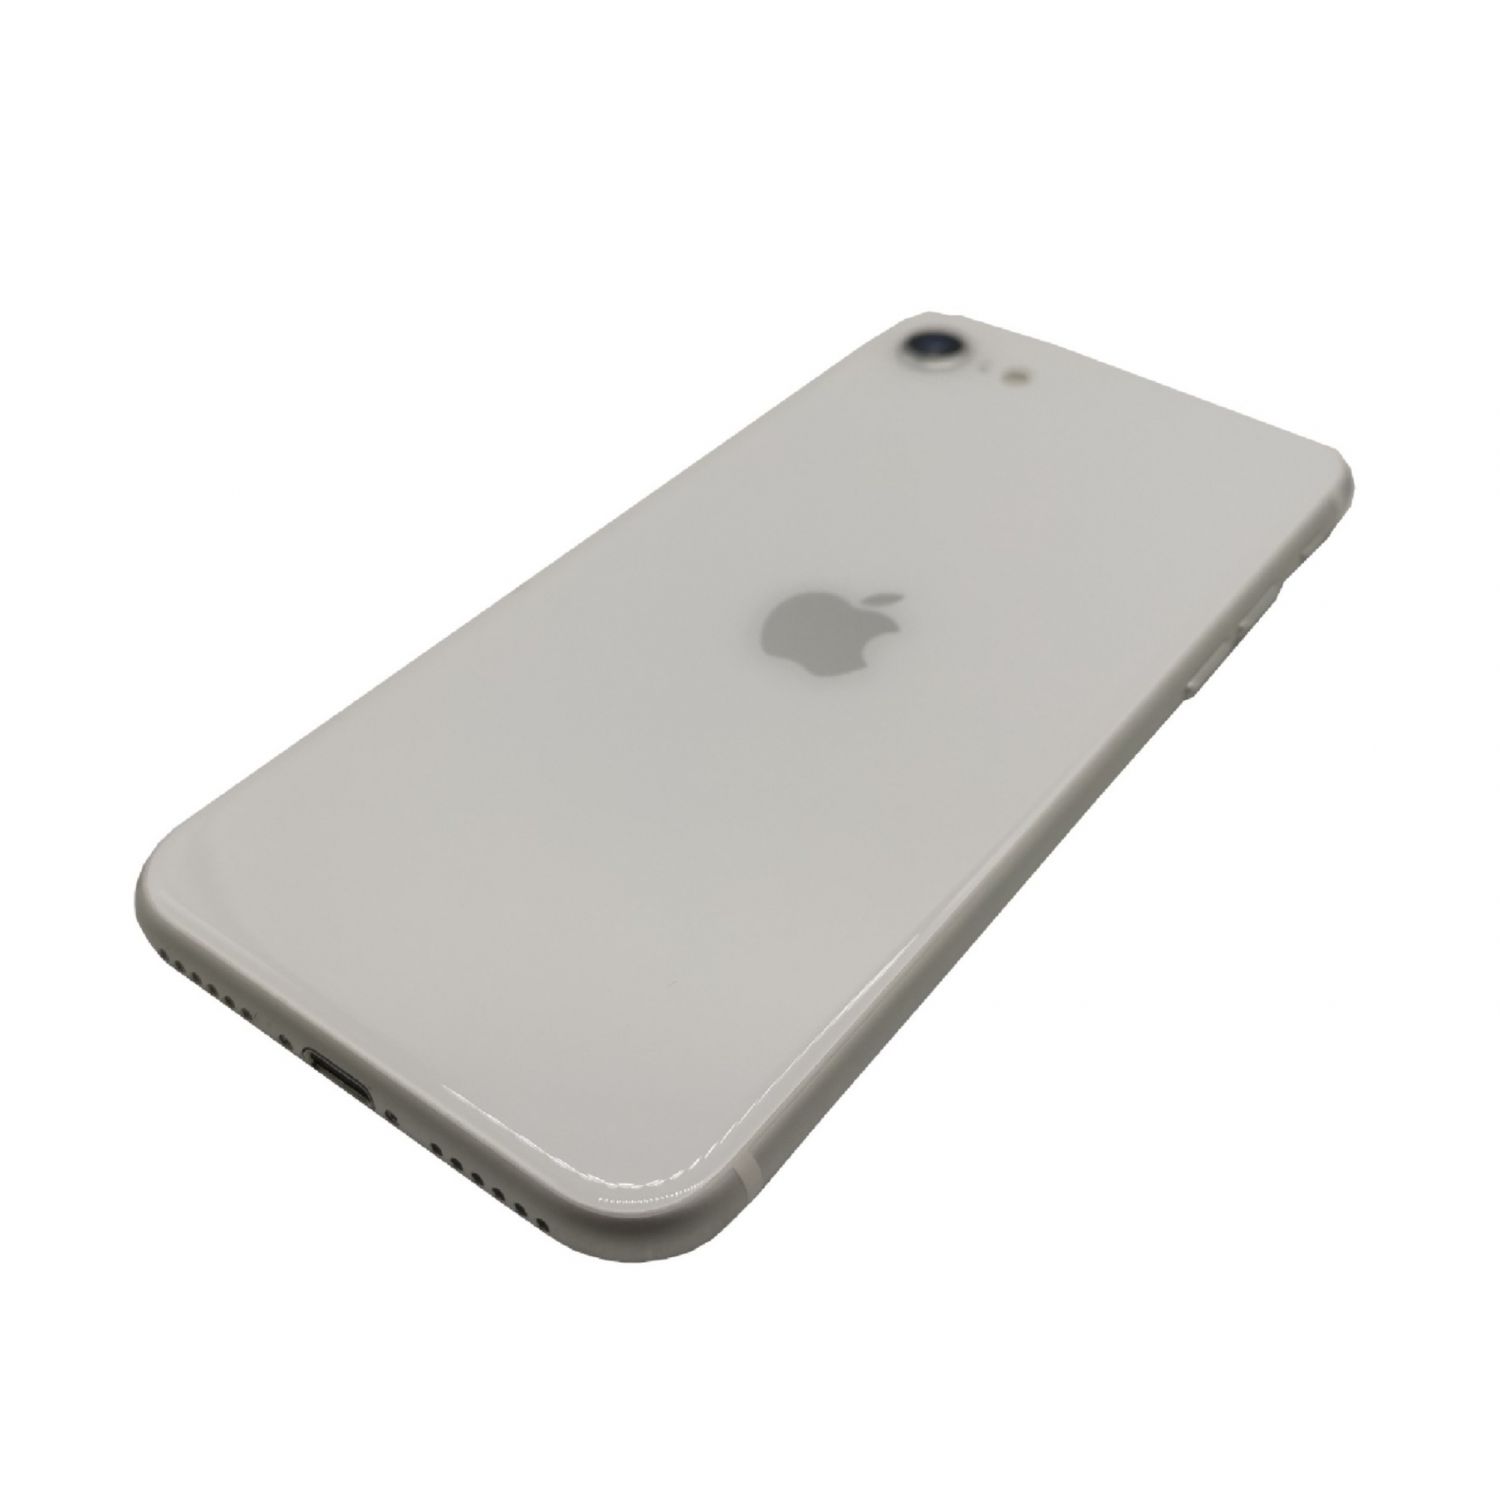 Apple (アップル) iPhone SE(第2世代) MXD12J/A SoftBank 128GB iOS